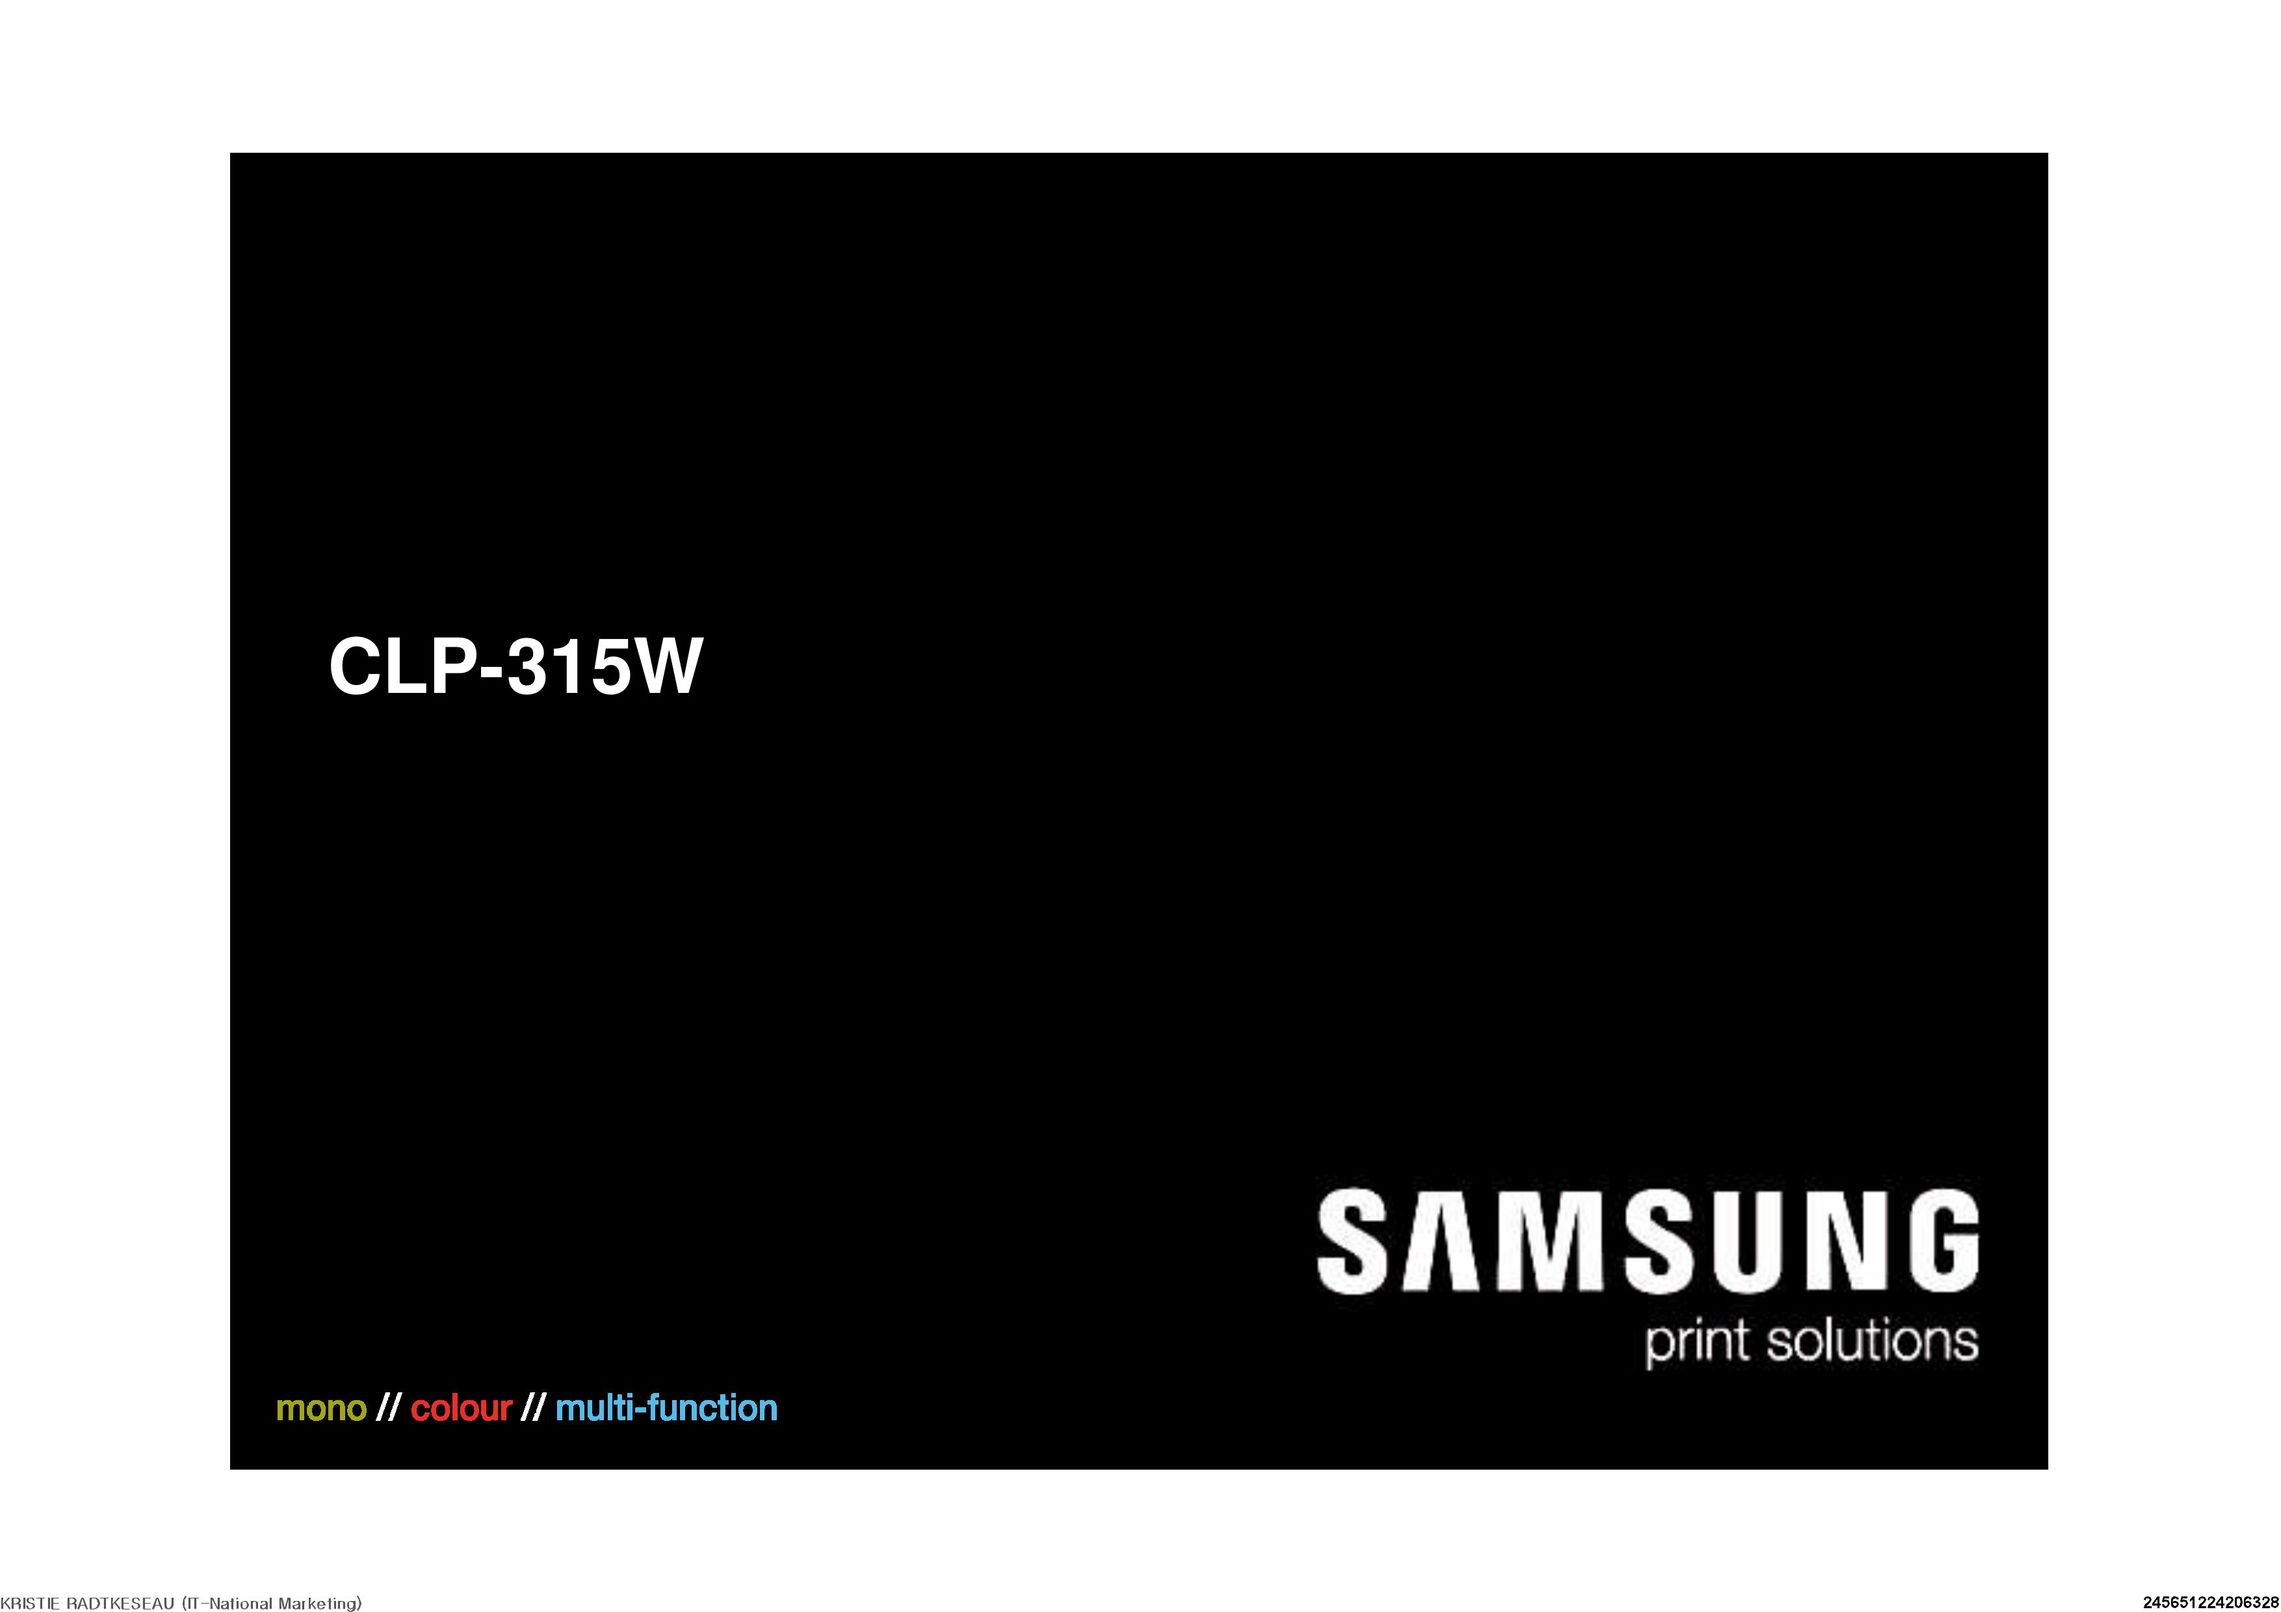 Samsung 315W Printer User Manual